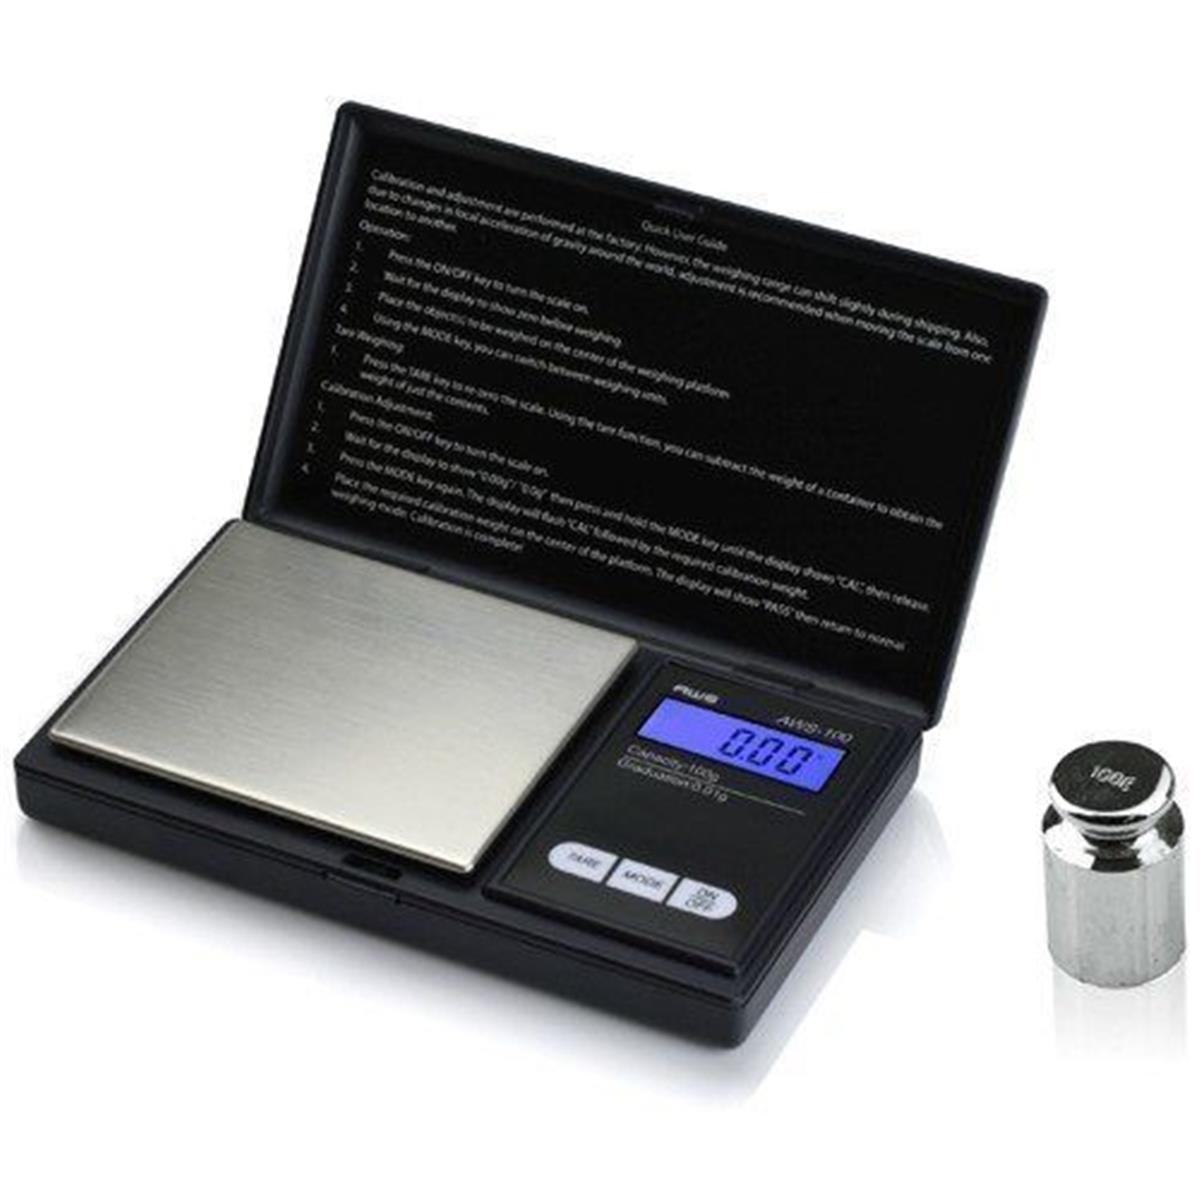 Aws-100-cal Digital Kitchen Pocket Scale, Black - Small